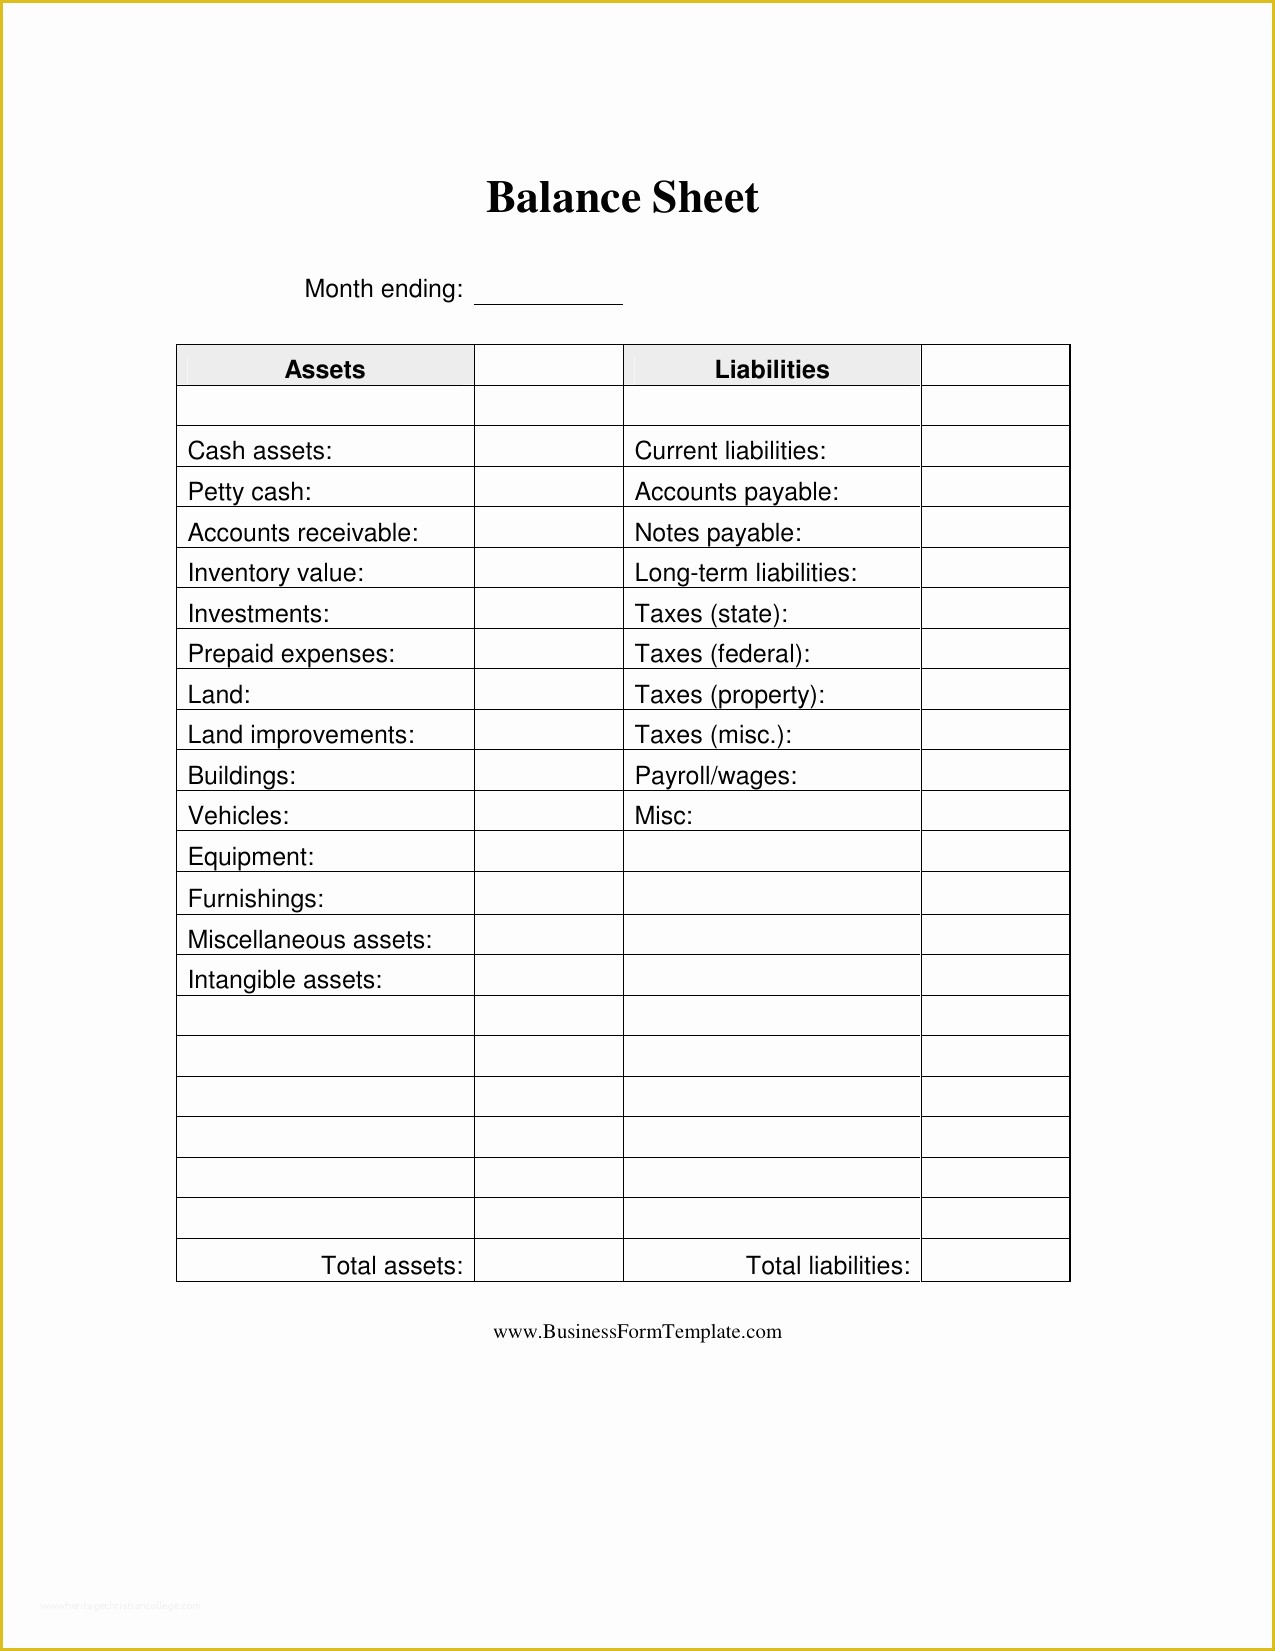 Free Business Balance Sheet Template Of Download Business Balance Sheet Template Excel